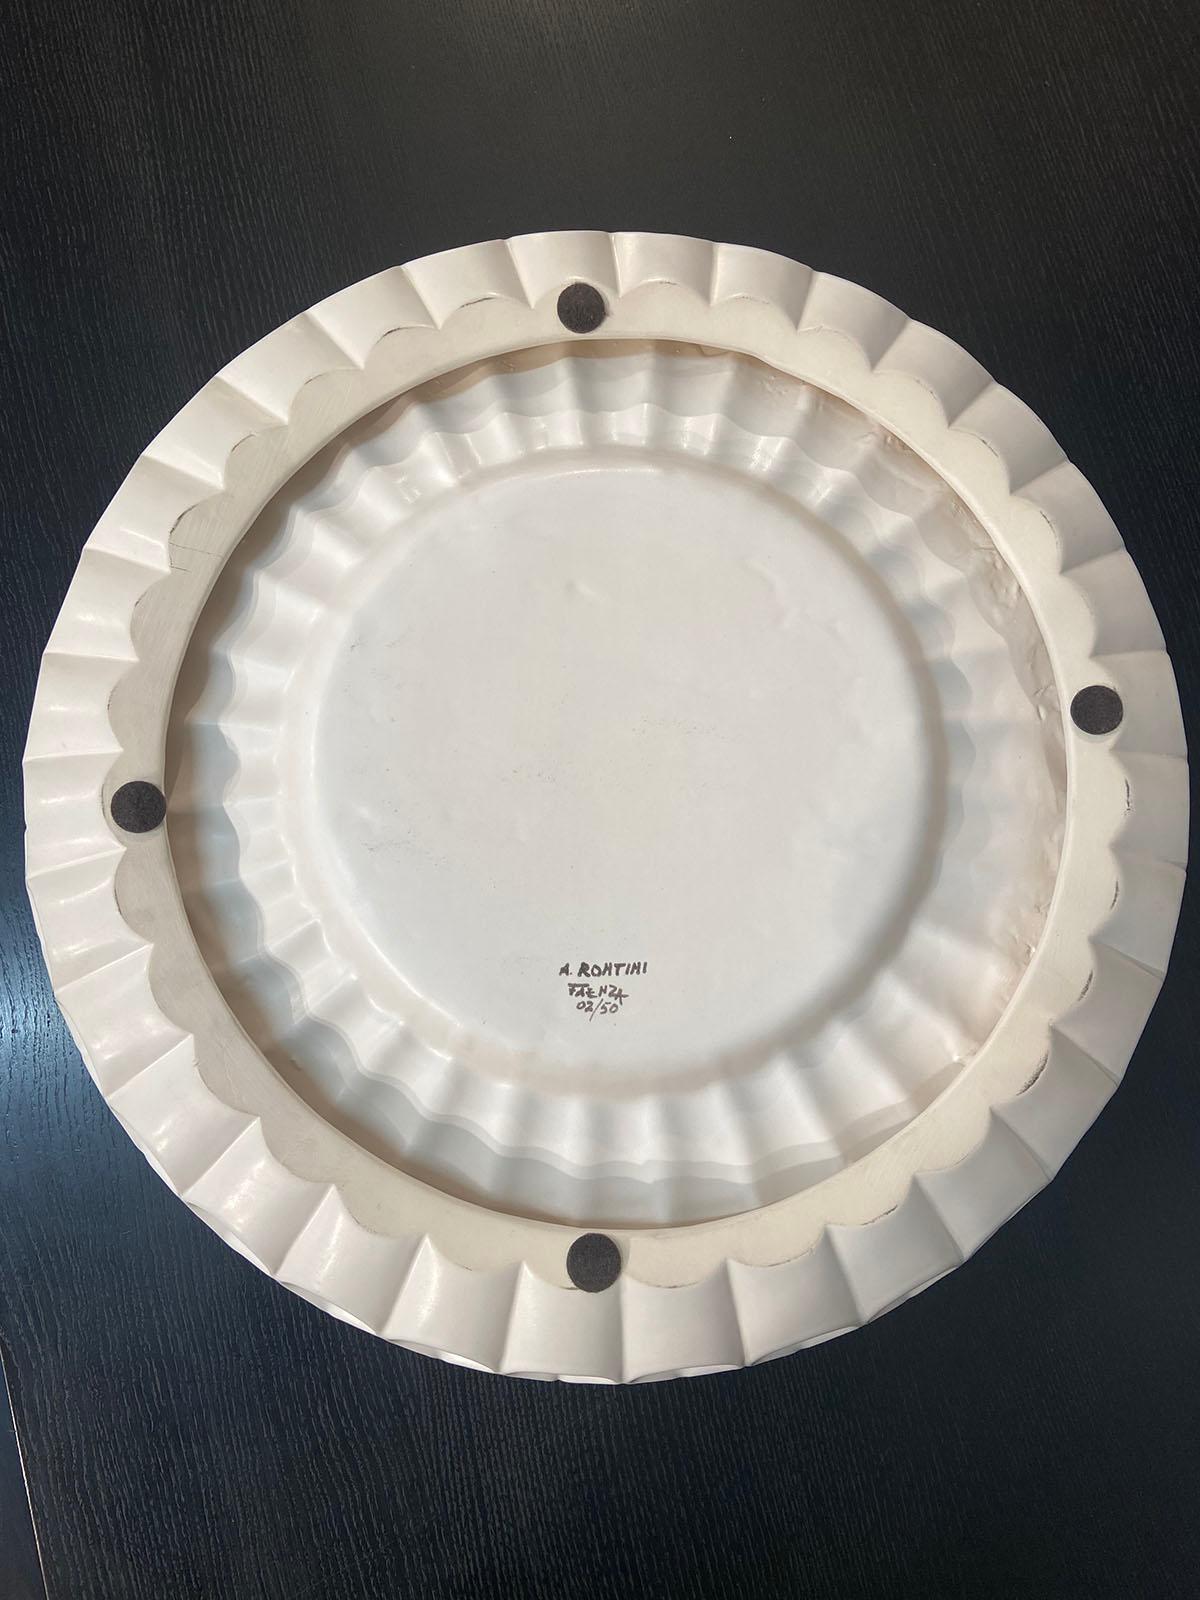 Italian Aldo Rontini, White Ceramic Tray, 2000